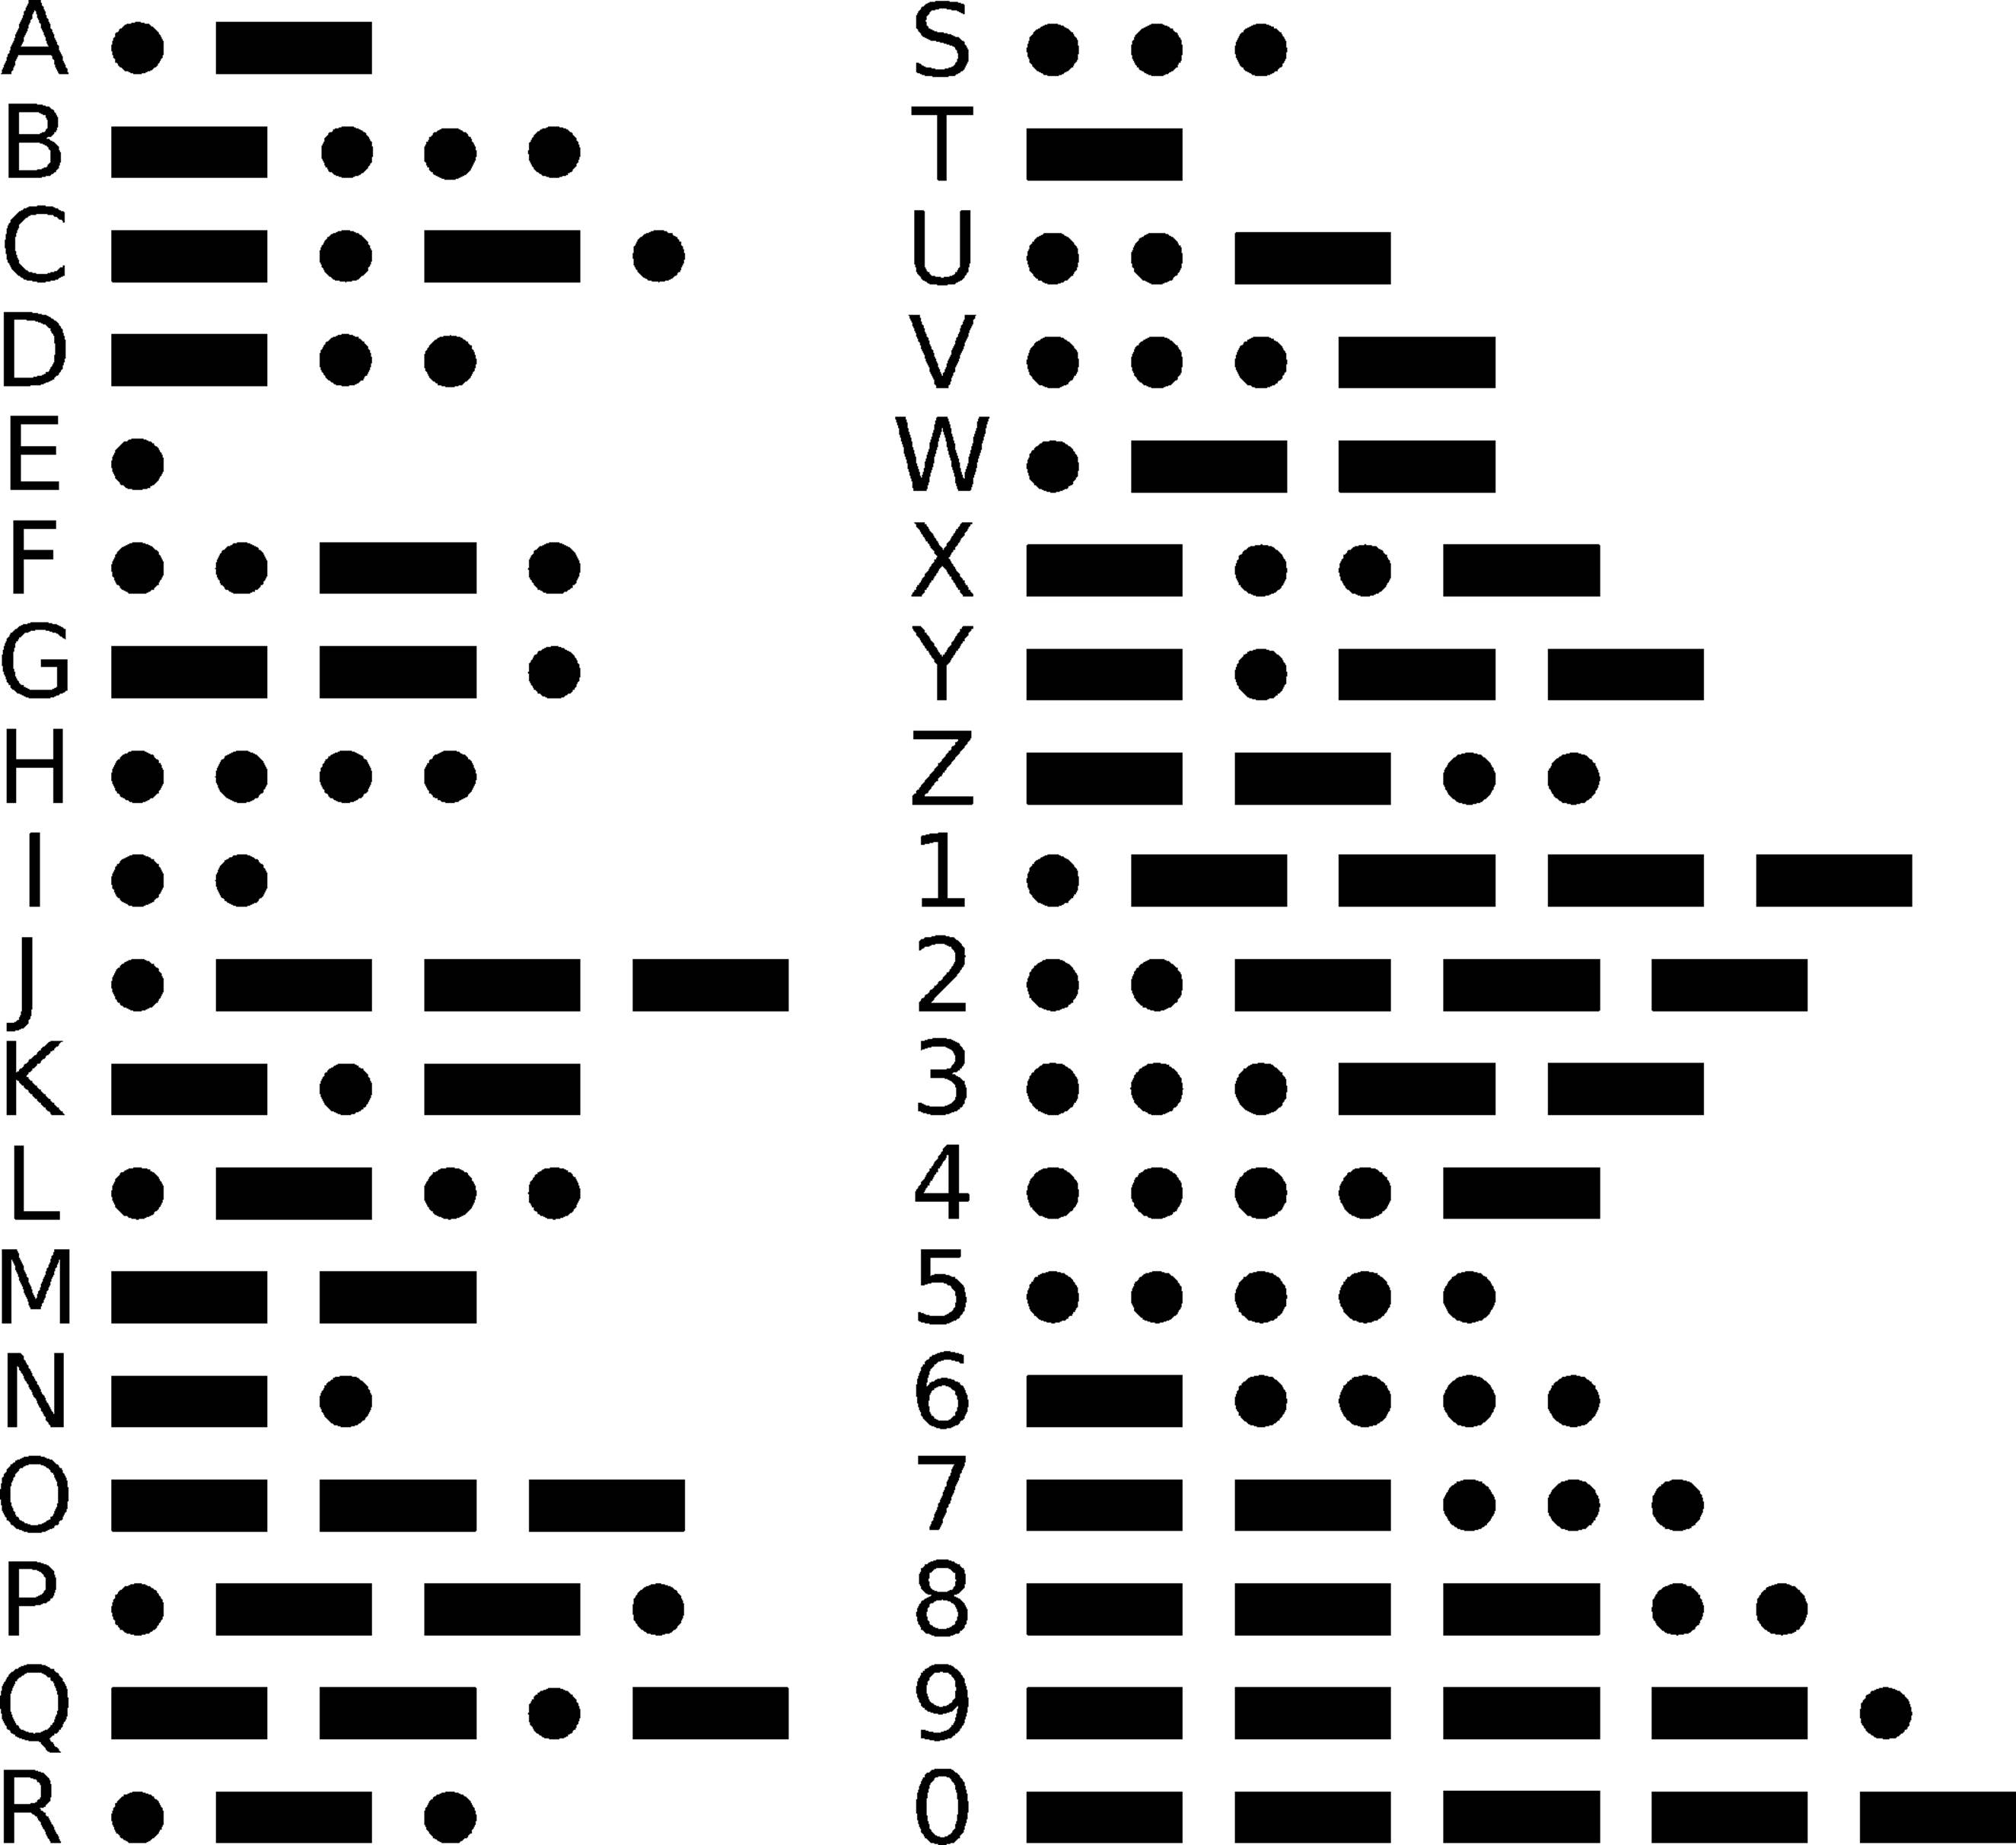 Morse Code Table.